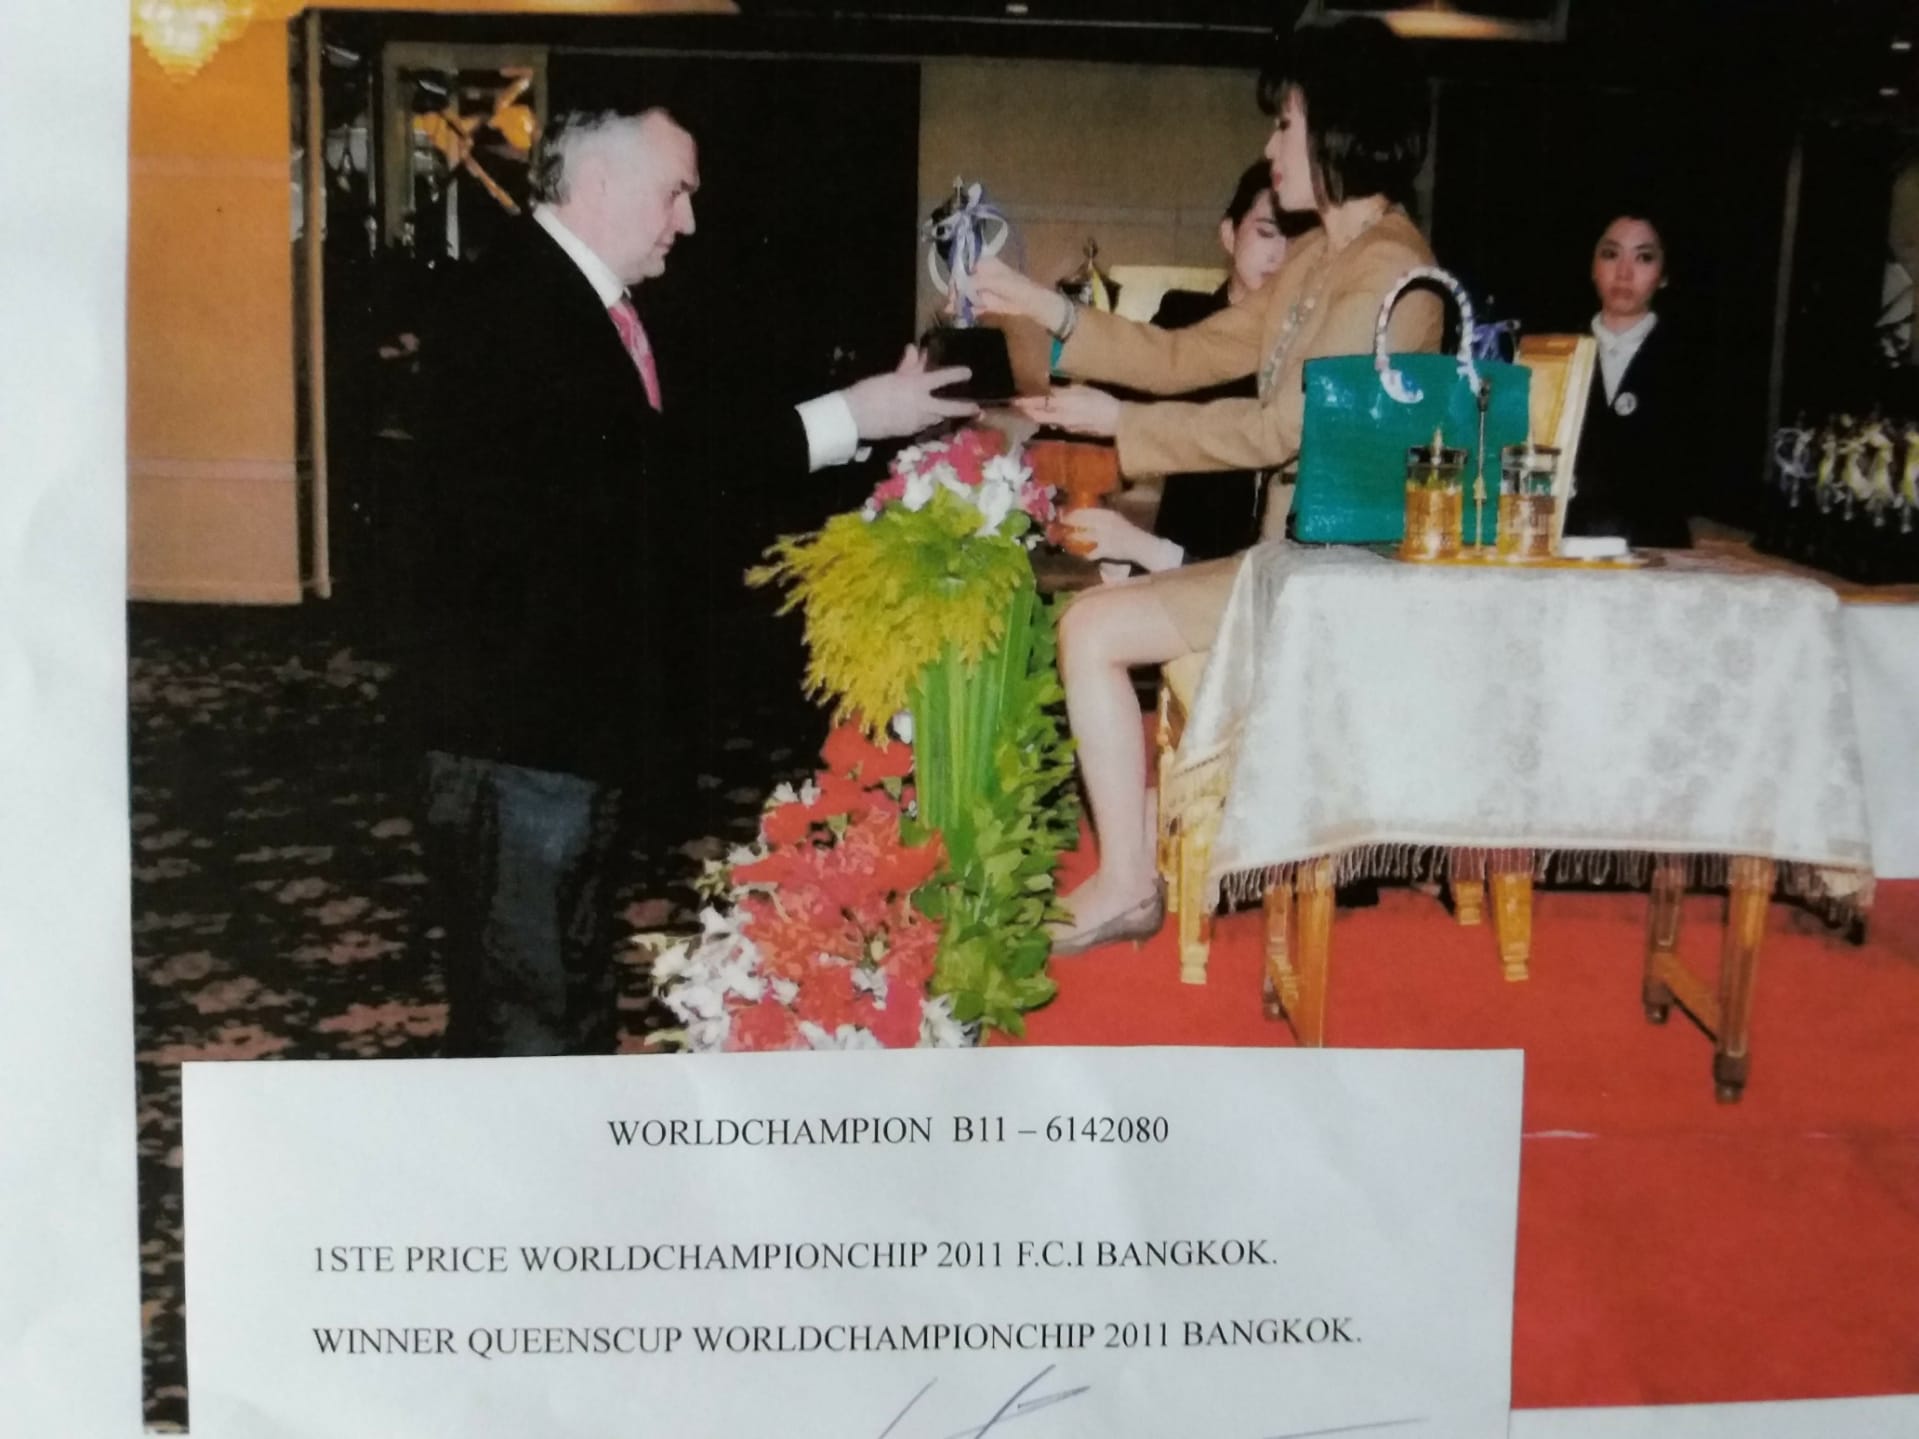 BE13-6052149 DİŞİ / ORJ DE RIJCK WALTER KARDESİ  1. PRİZE WORLD CHAMPION BANGKOK